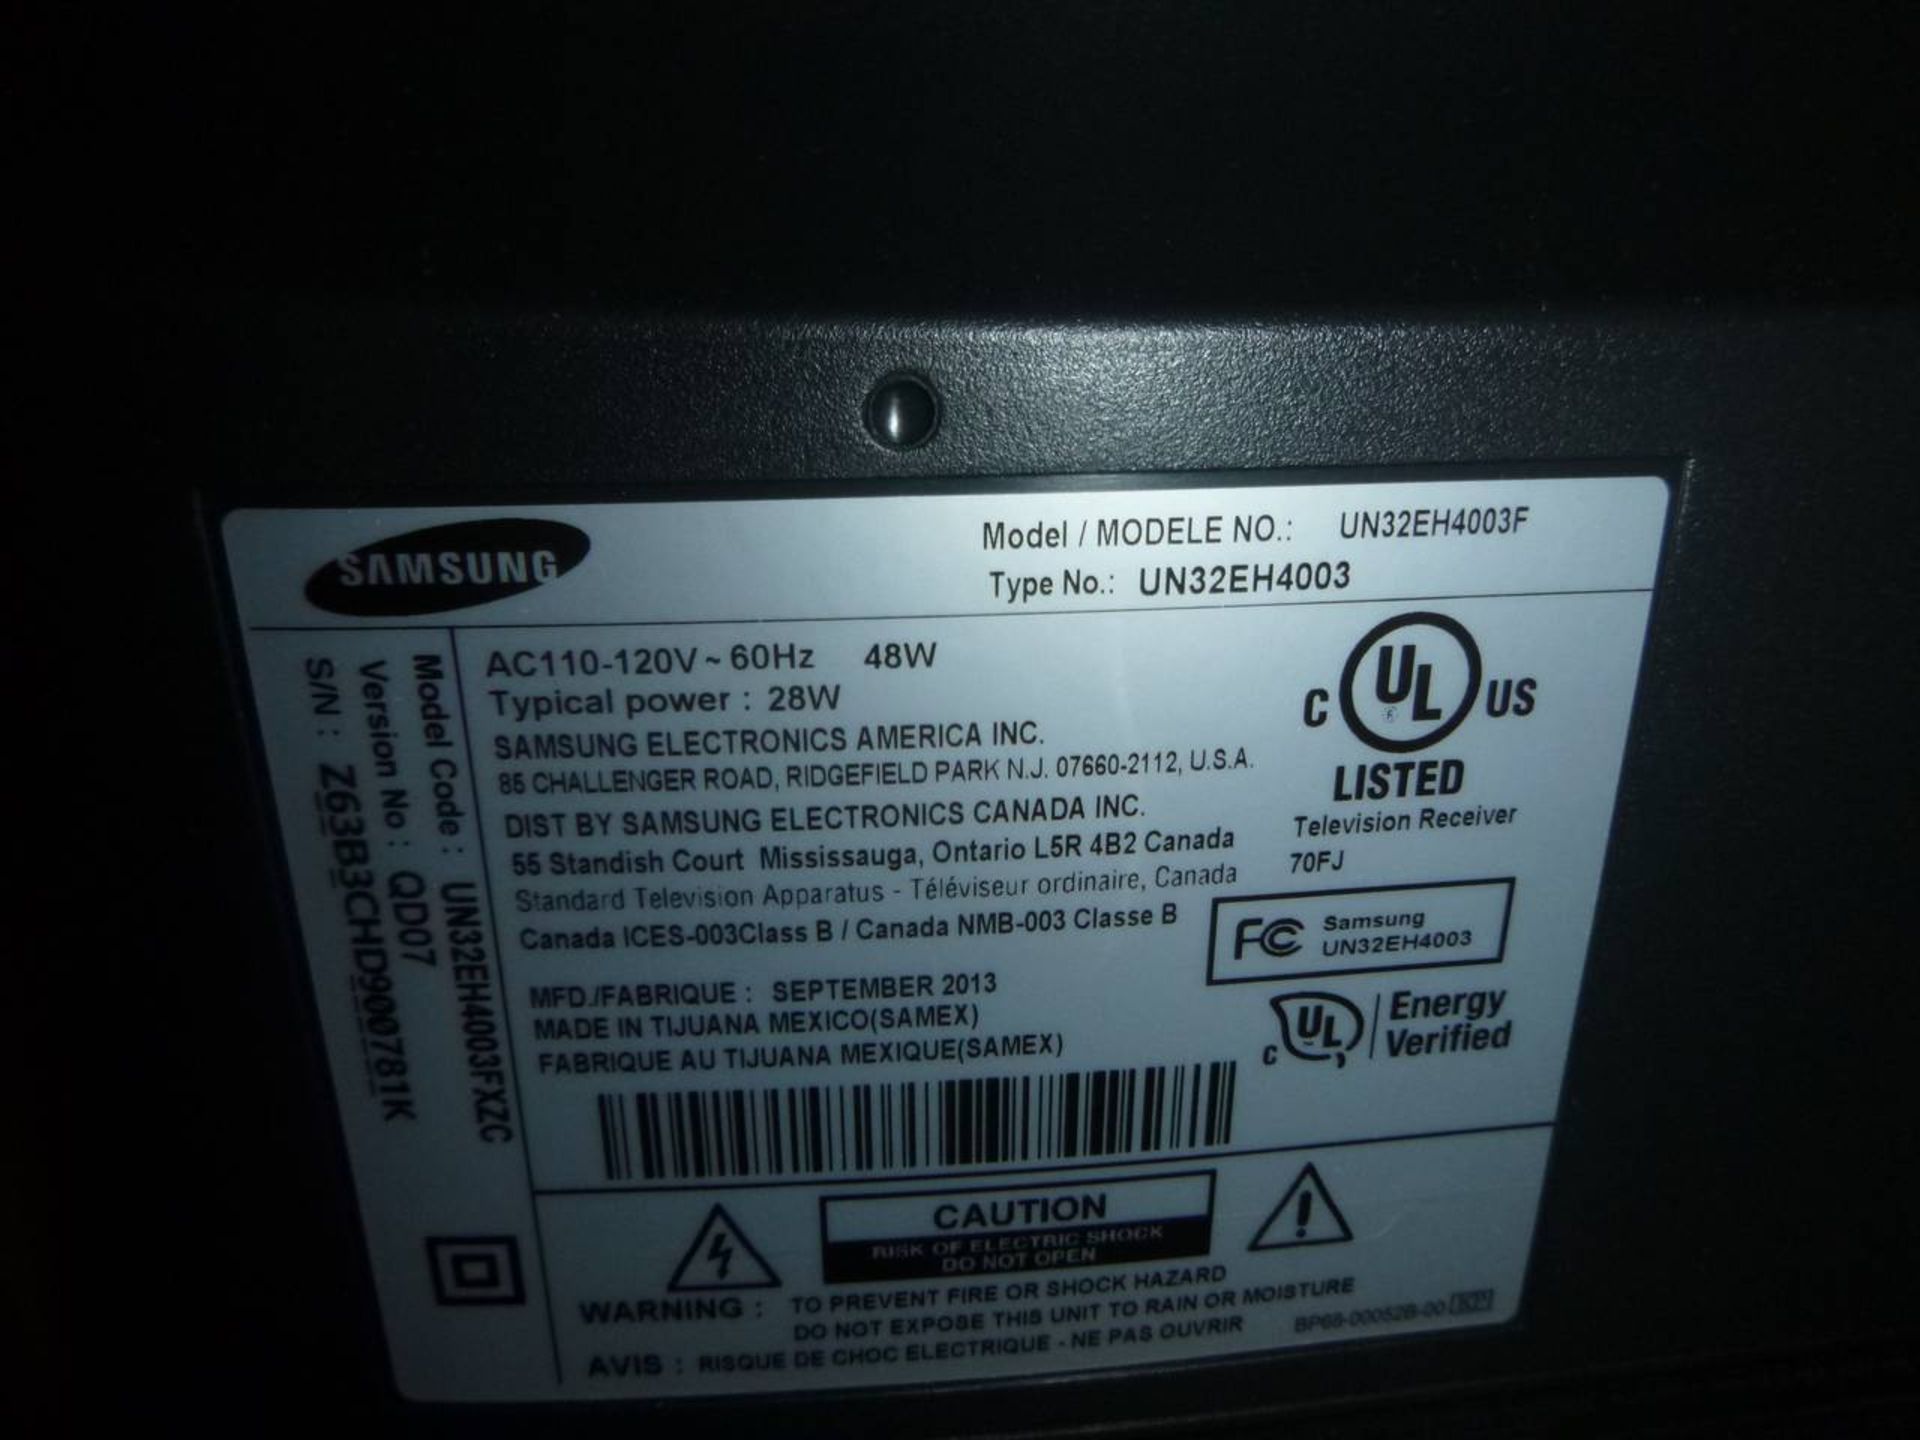 Samsung UN32EH4003F Flat screen TV - Image 2 of 2